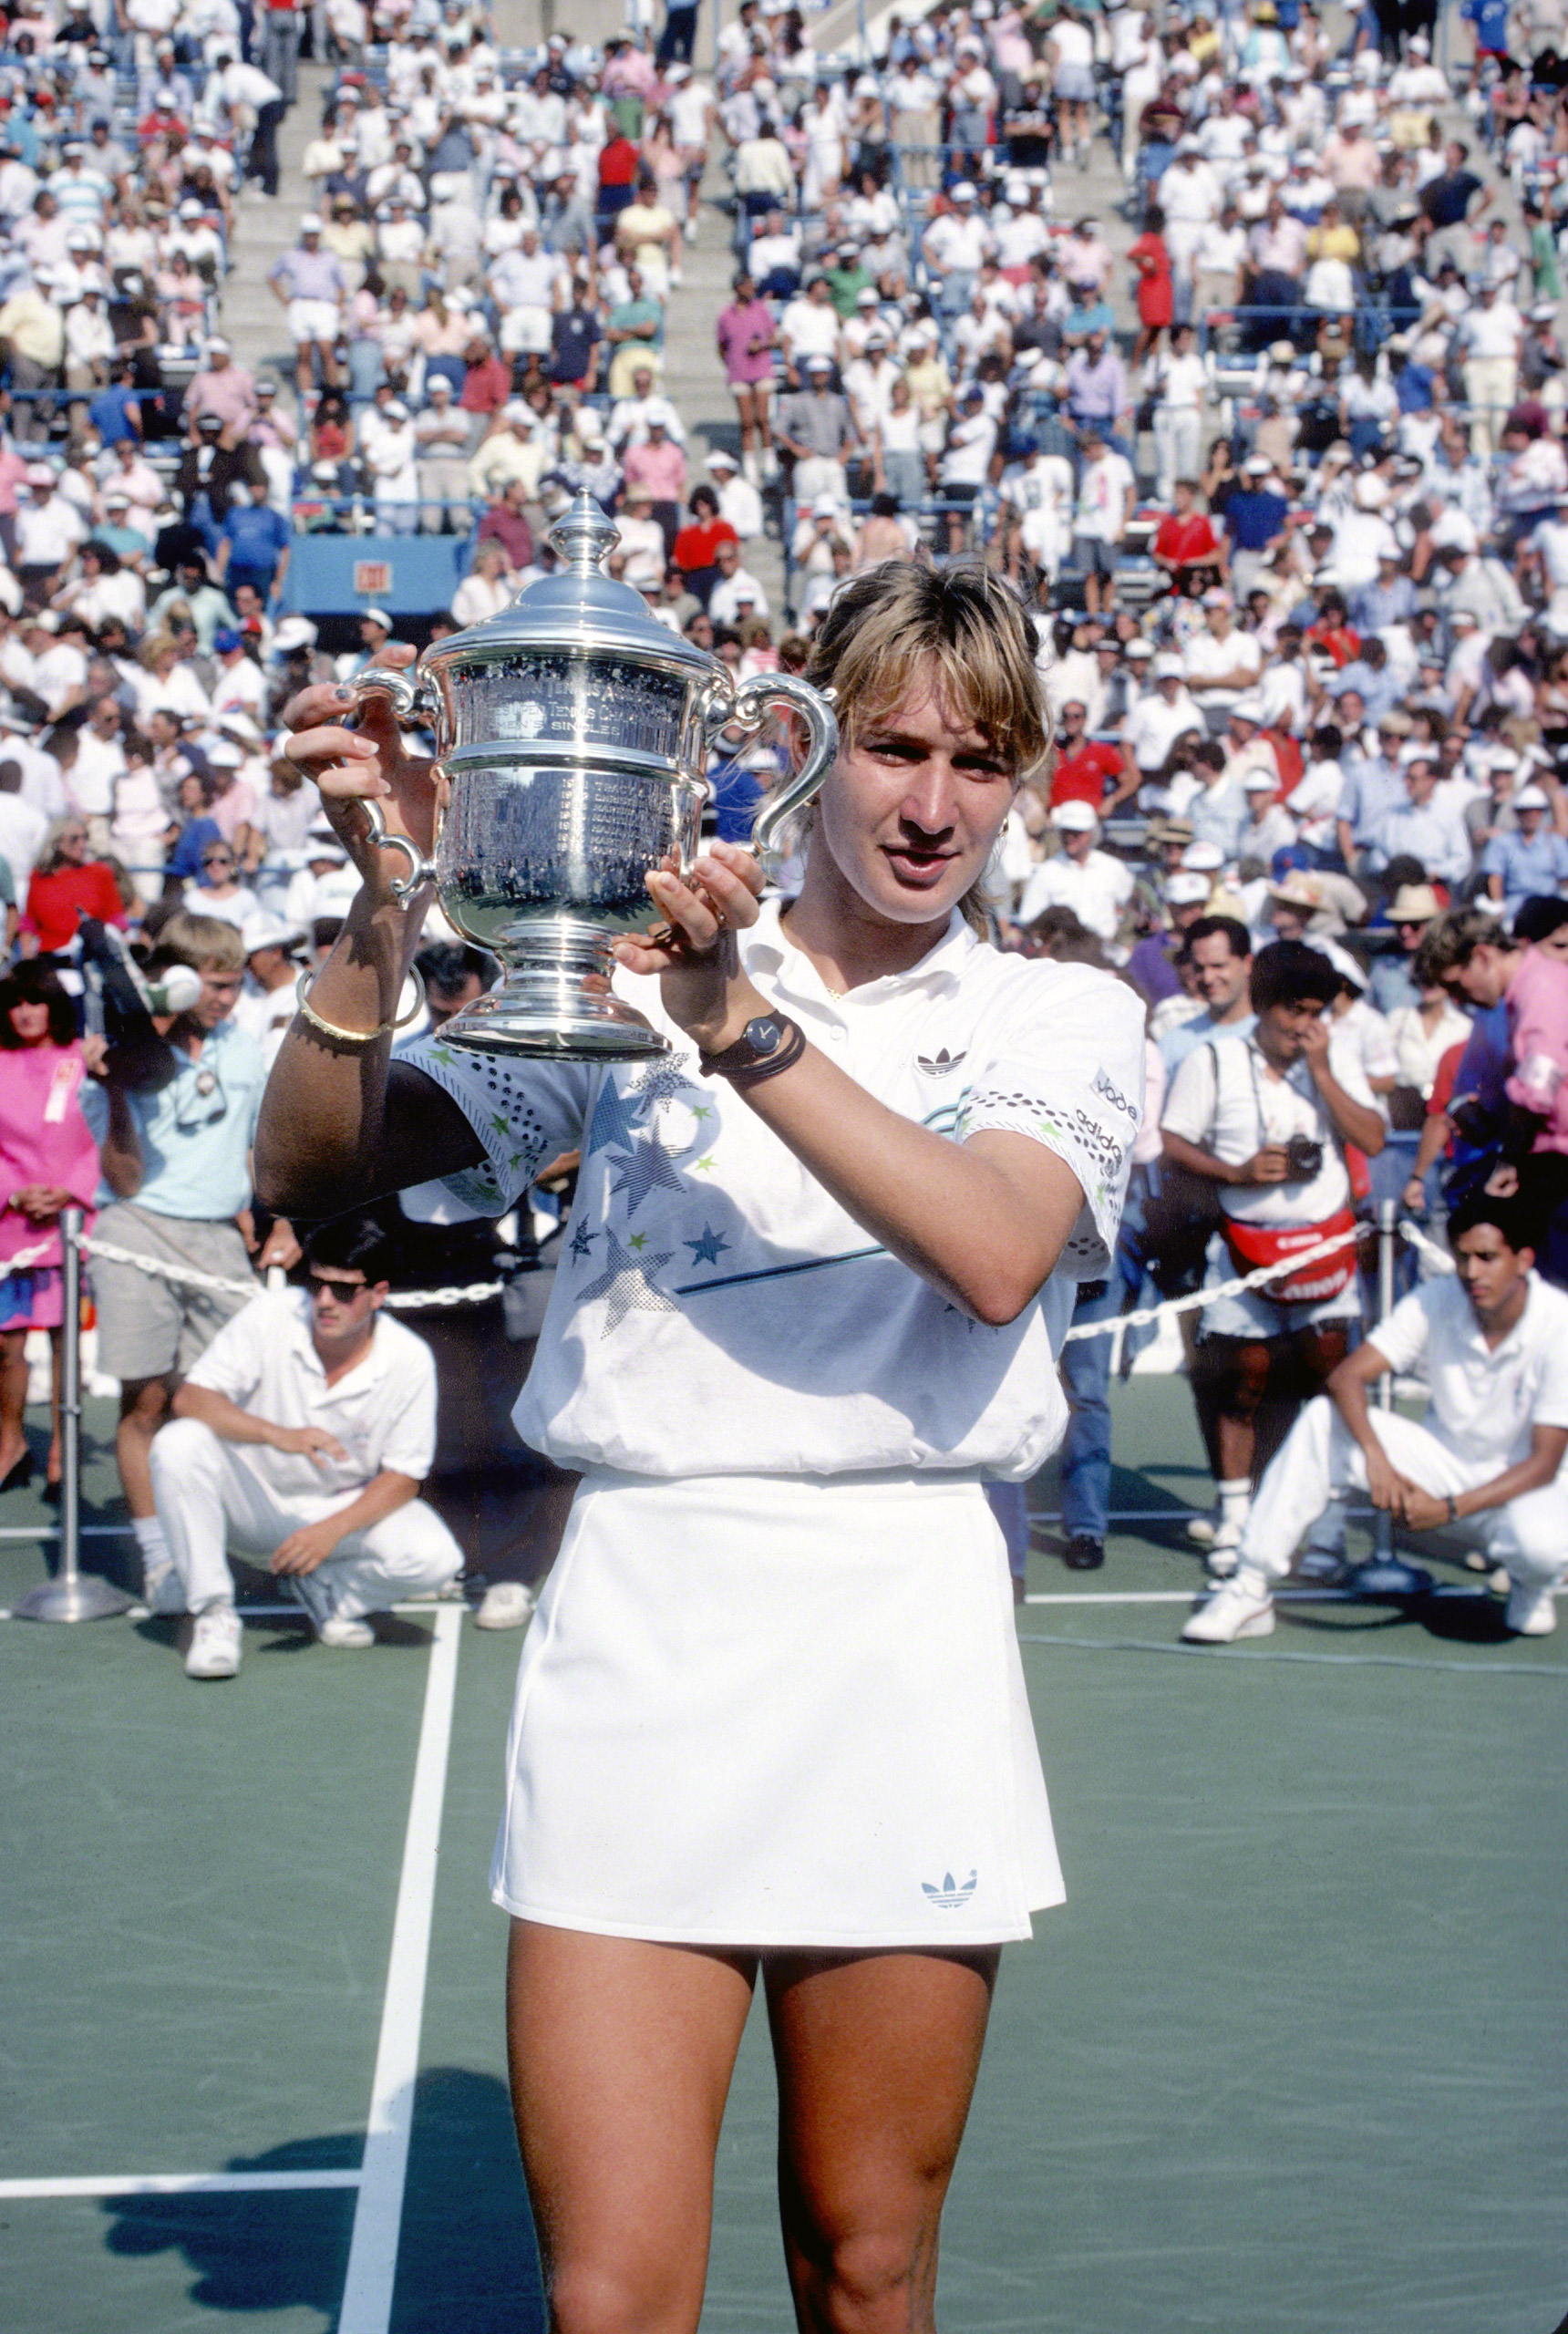 Steffi Graf during the 1988 U.S. Open Tennis Tournament in Flushing, Queens.